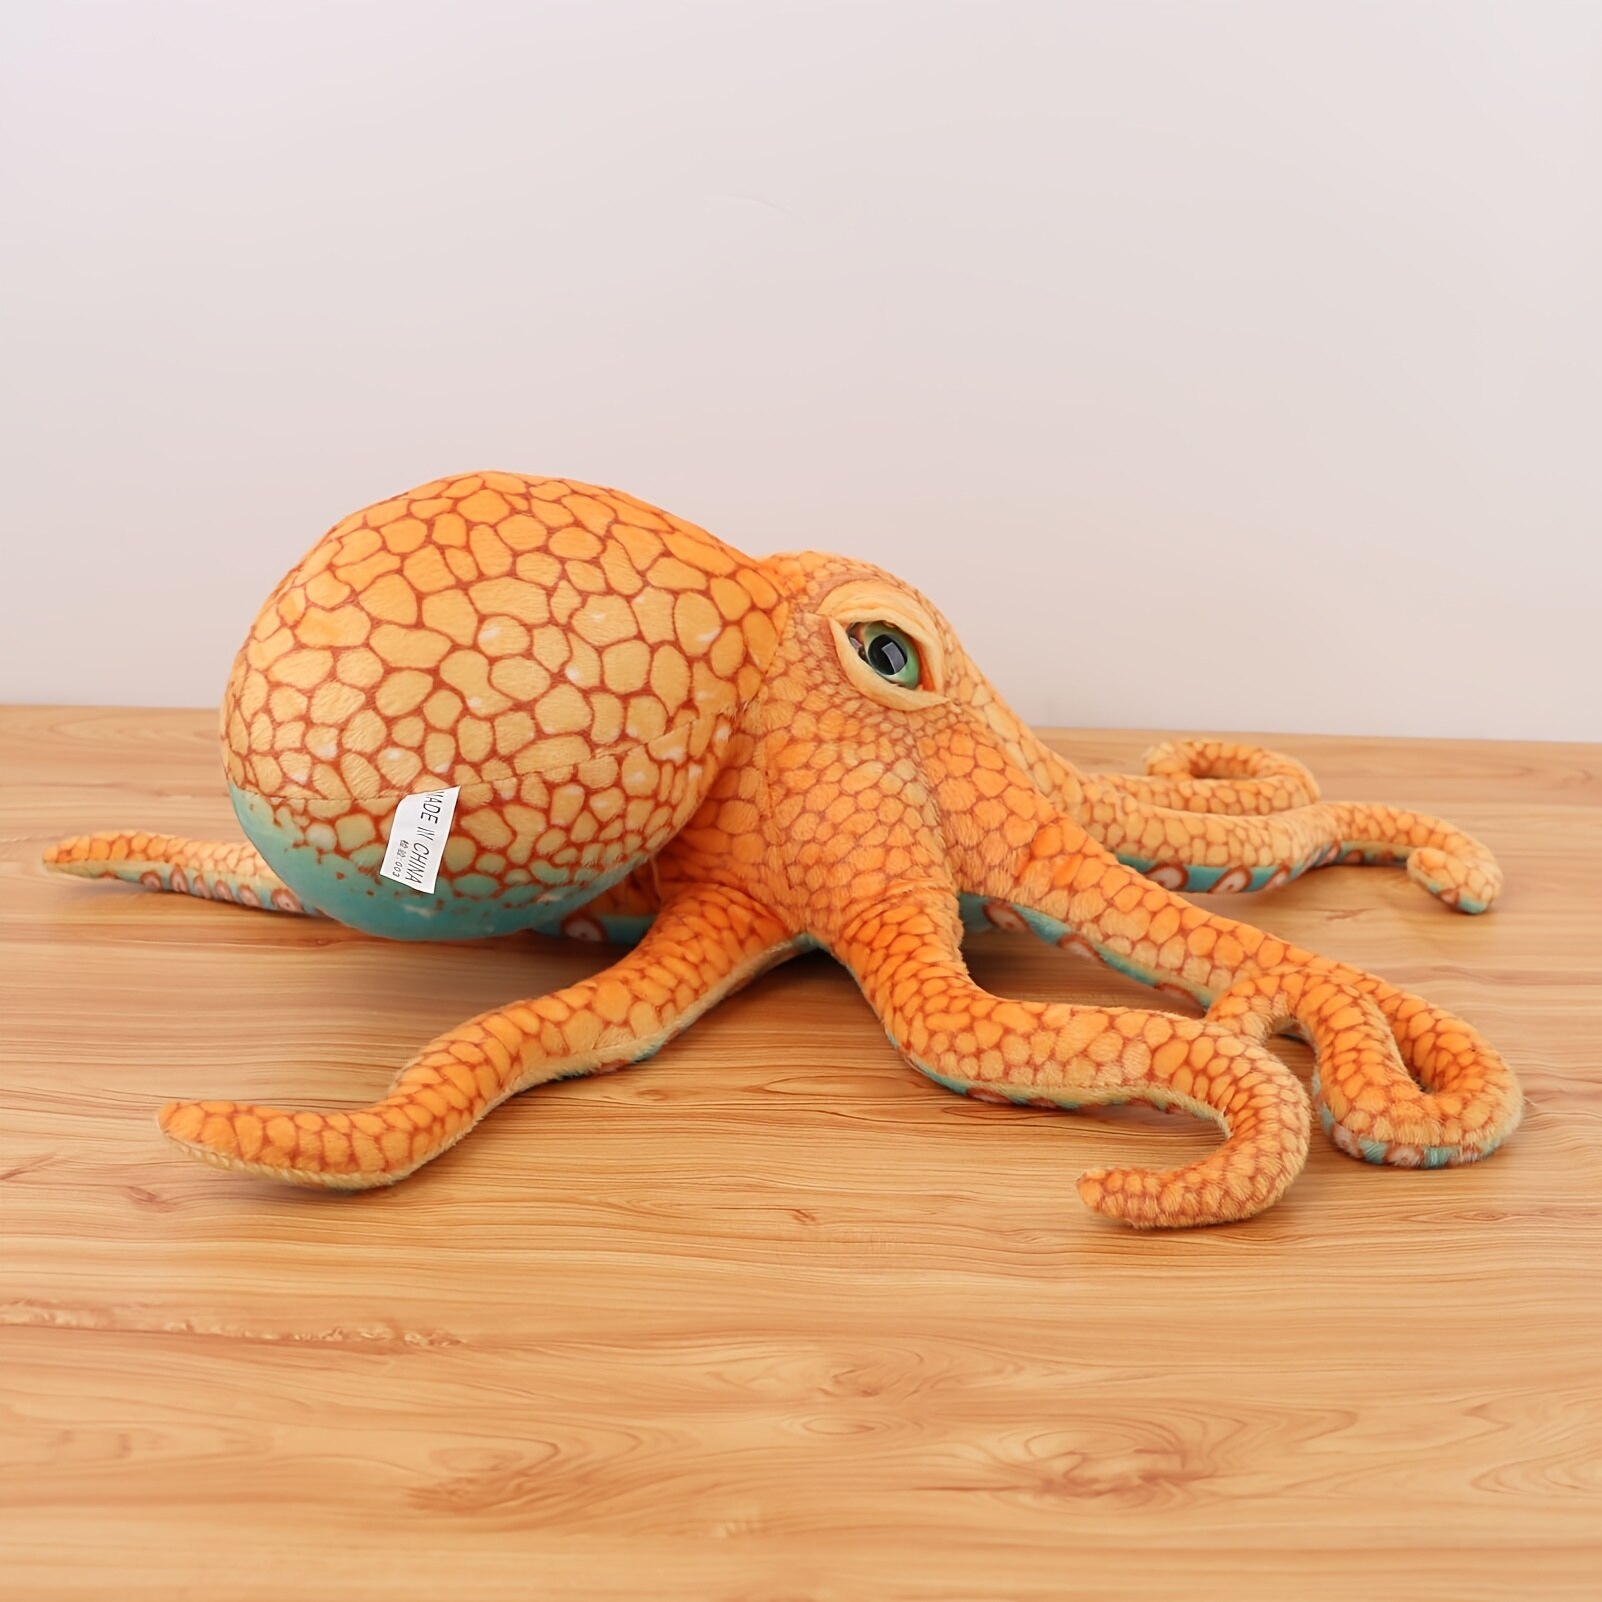 55 80cm Giant Simulated octopus Stuffed Toy High Quality lifelike Stuffed Sea Animal Doll Plush toys 1